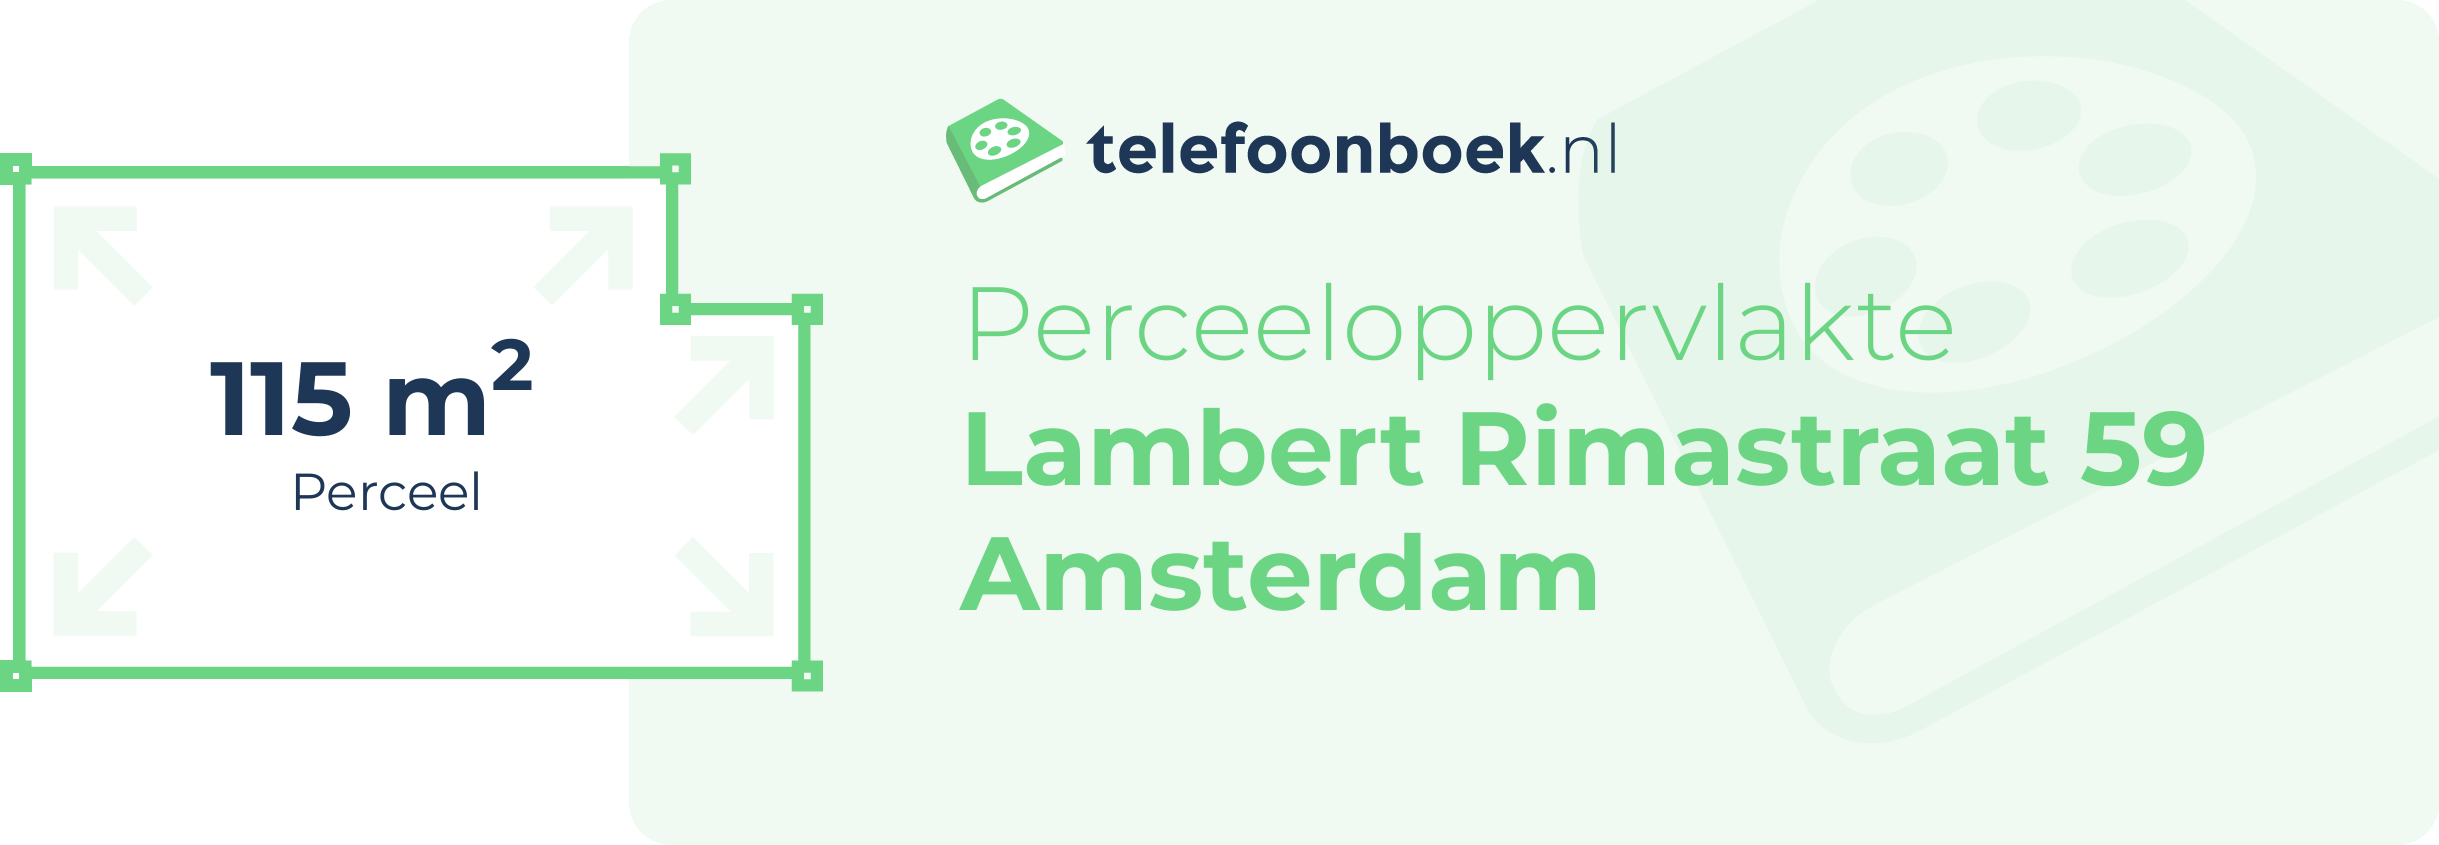 Perceeloppervlakte Lambert Rimastraat 59 Amsterdam